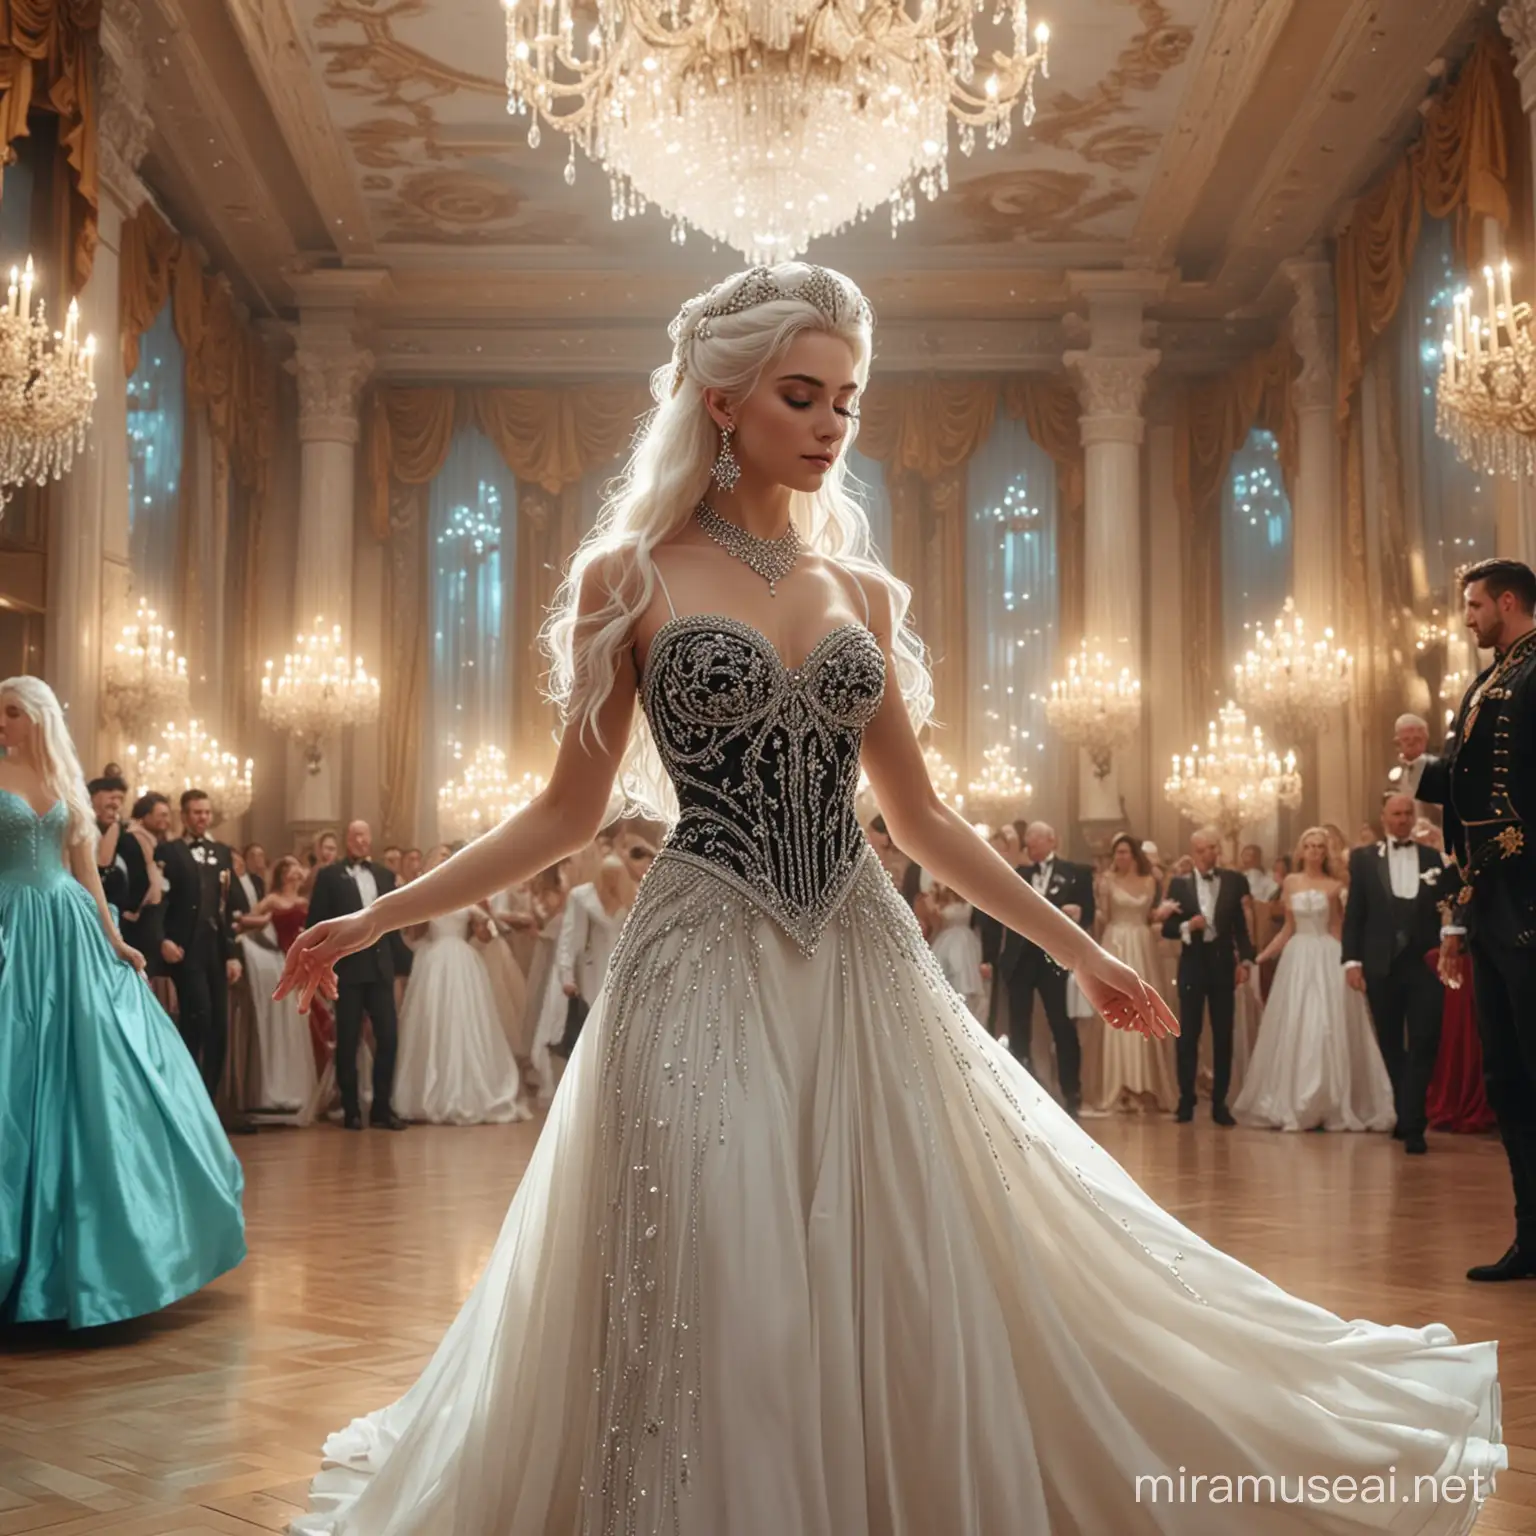 Fantasy Art Elegant Princess and Prince Wedding Dance in Turquoise Ballroom